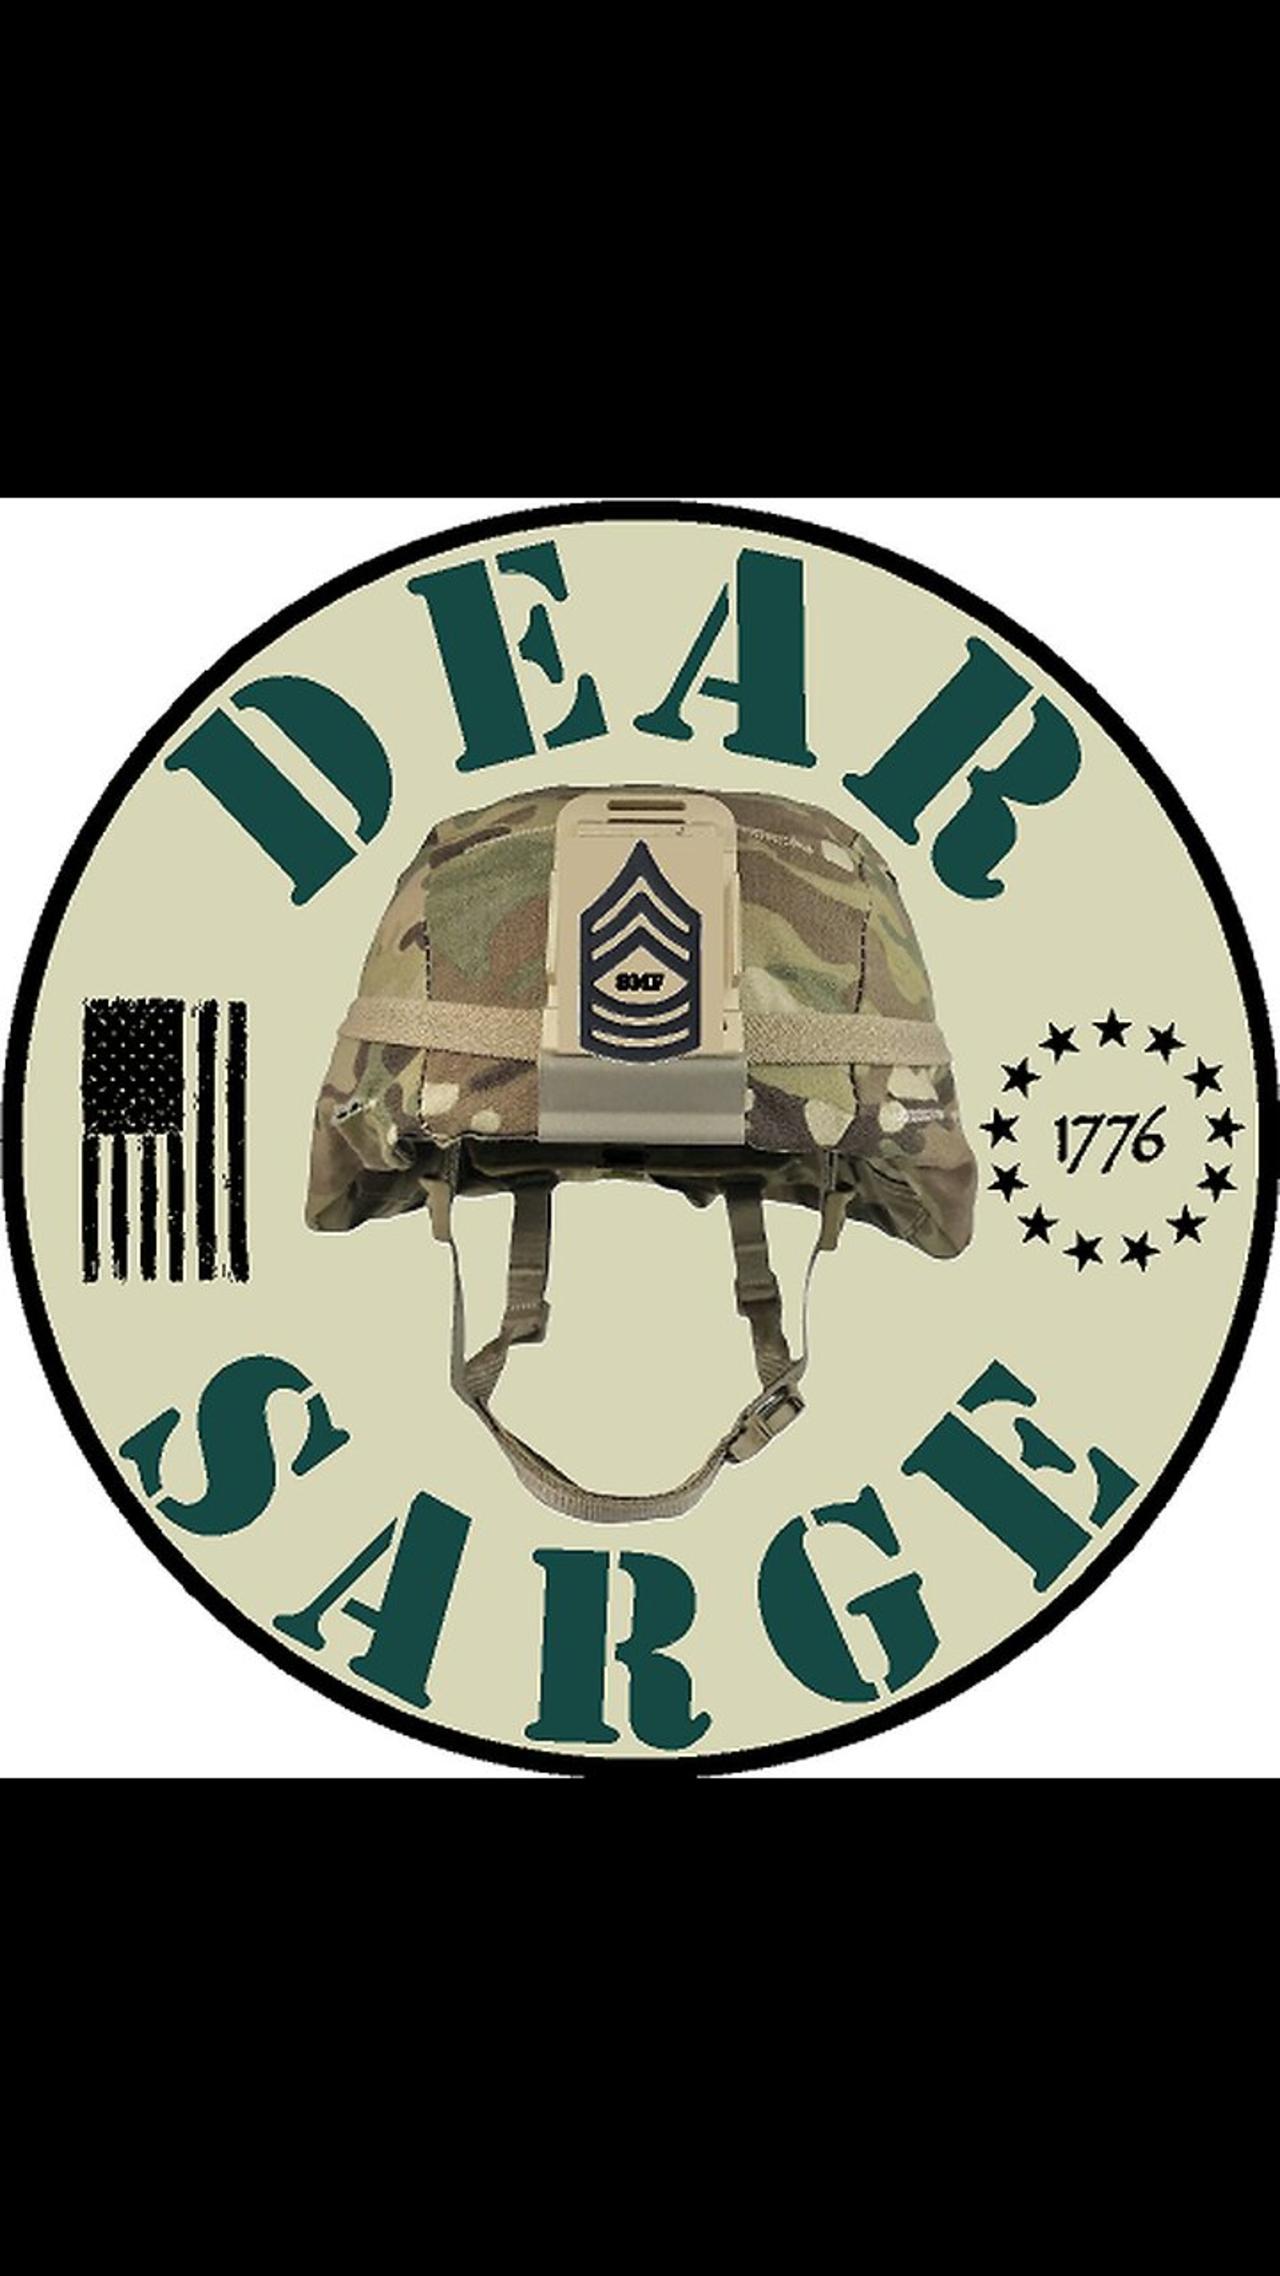 Dear Sarge #73: Promo For ‘Pud Suds Cream Ale’